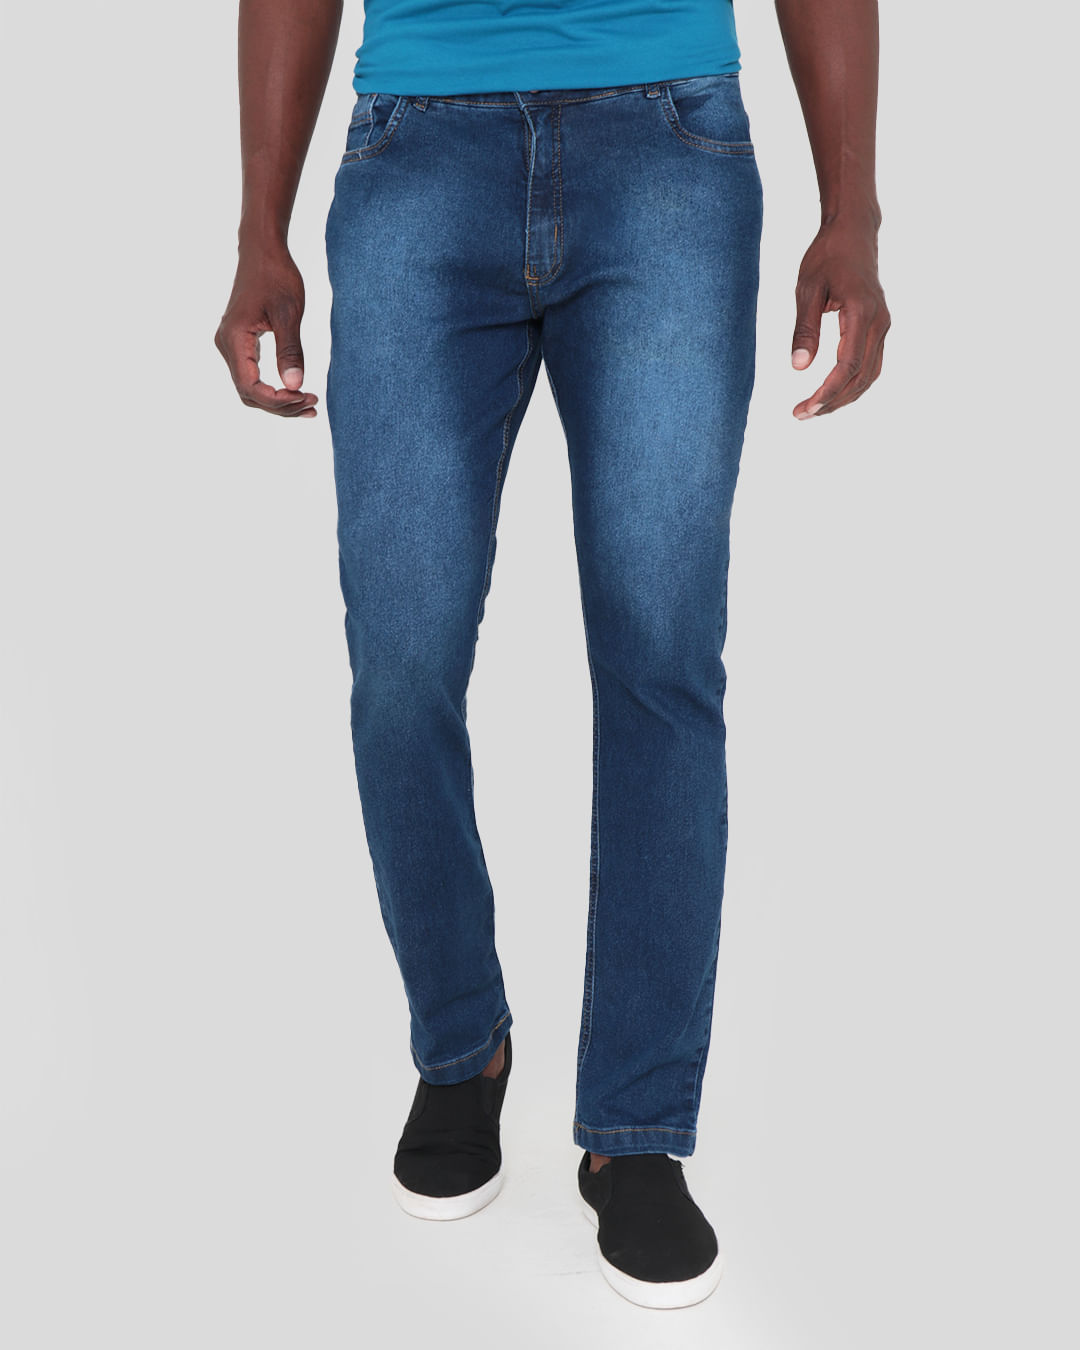 23121000262045-blue-jeans-medio-1